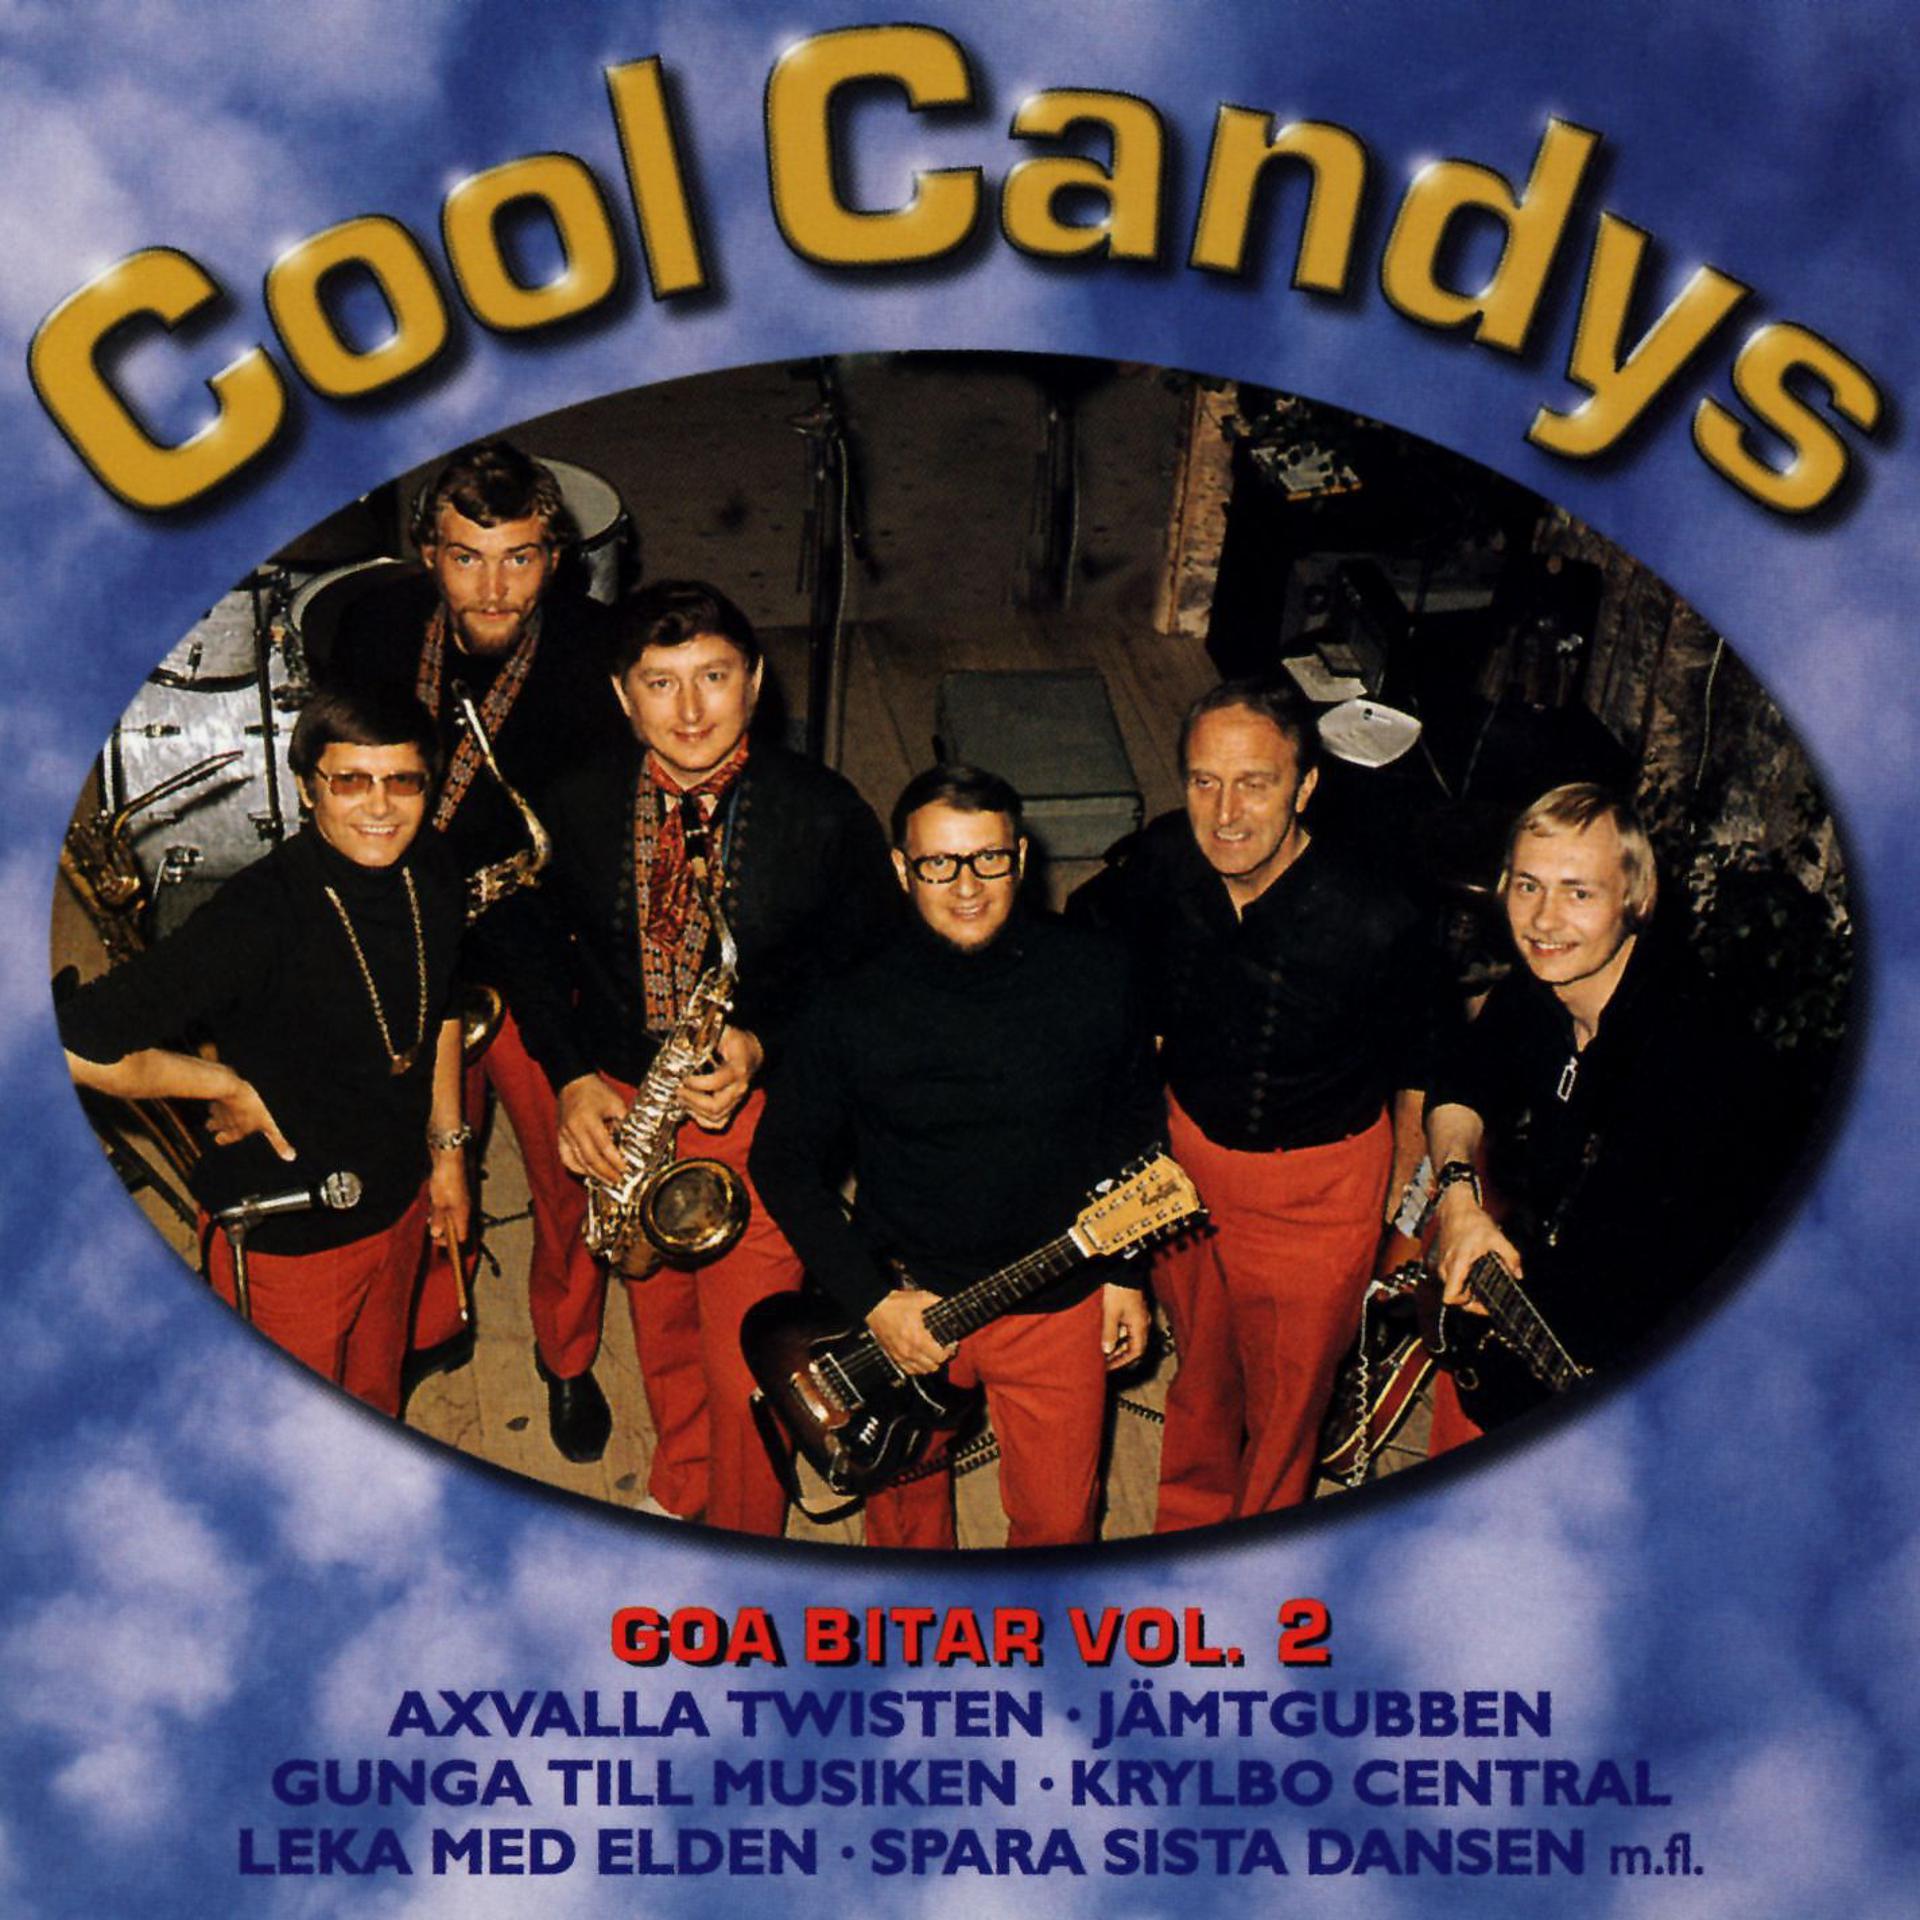 Постер альбома Cool Candys - Goa bitar 2